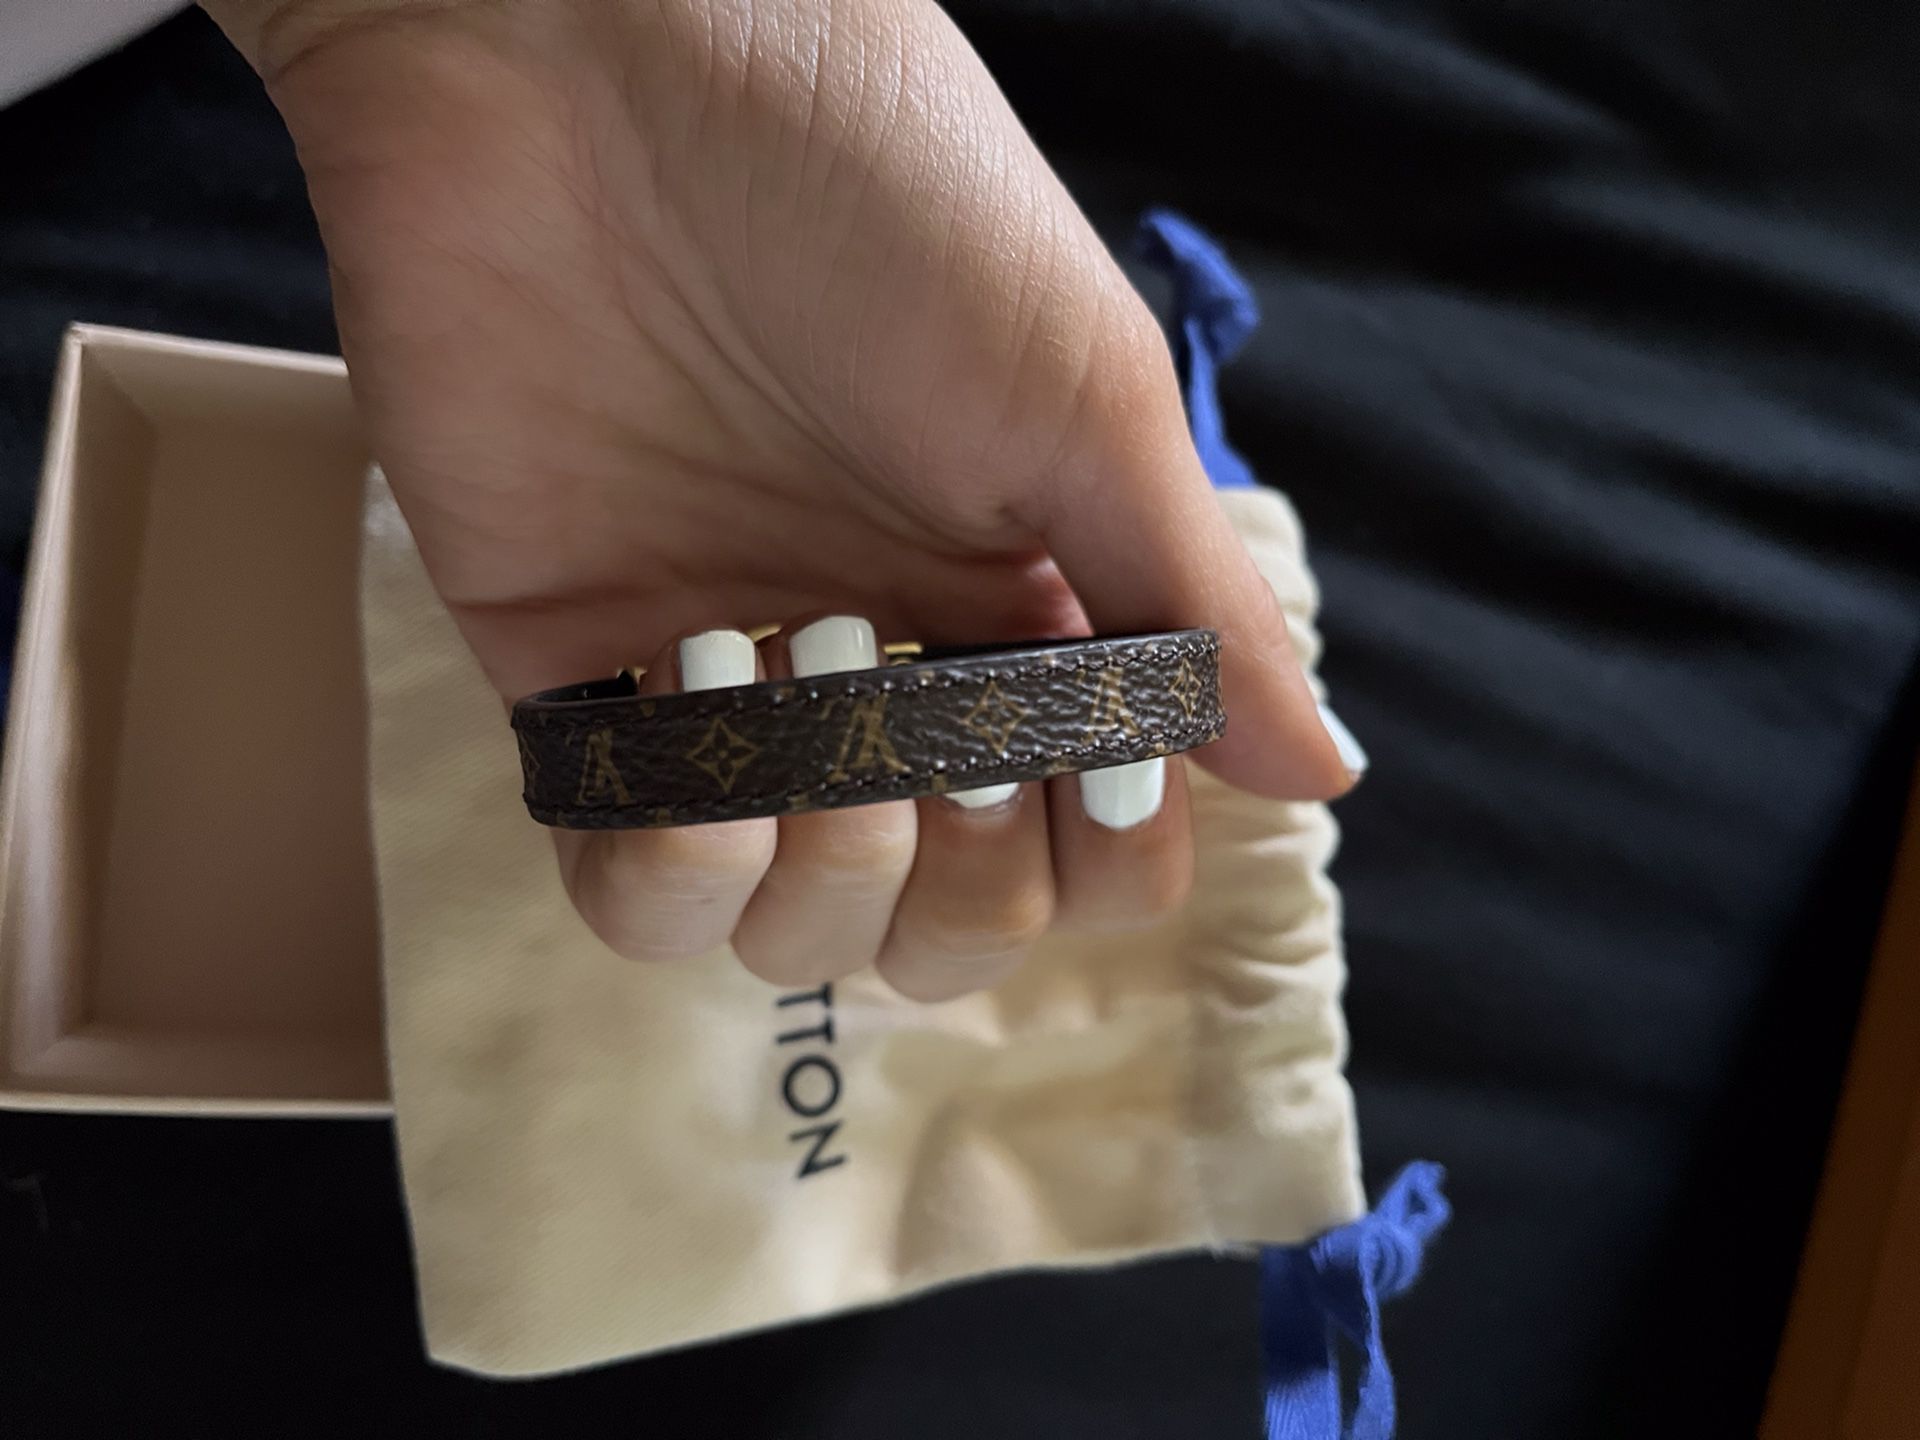 Louis Vuitton Nanogram strass bracelet for Sale in Chandler, AZ - OfferUp